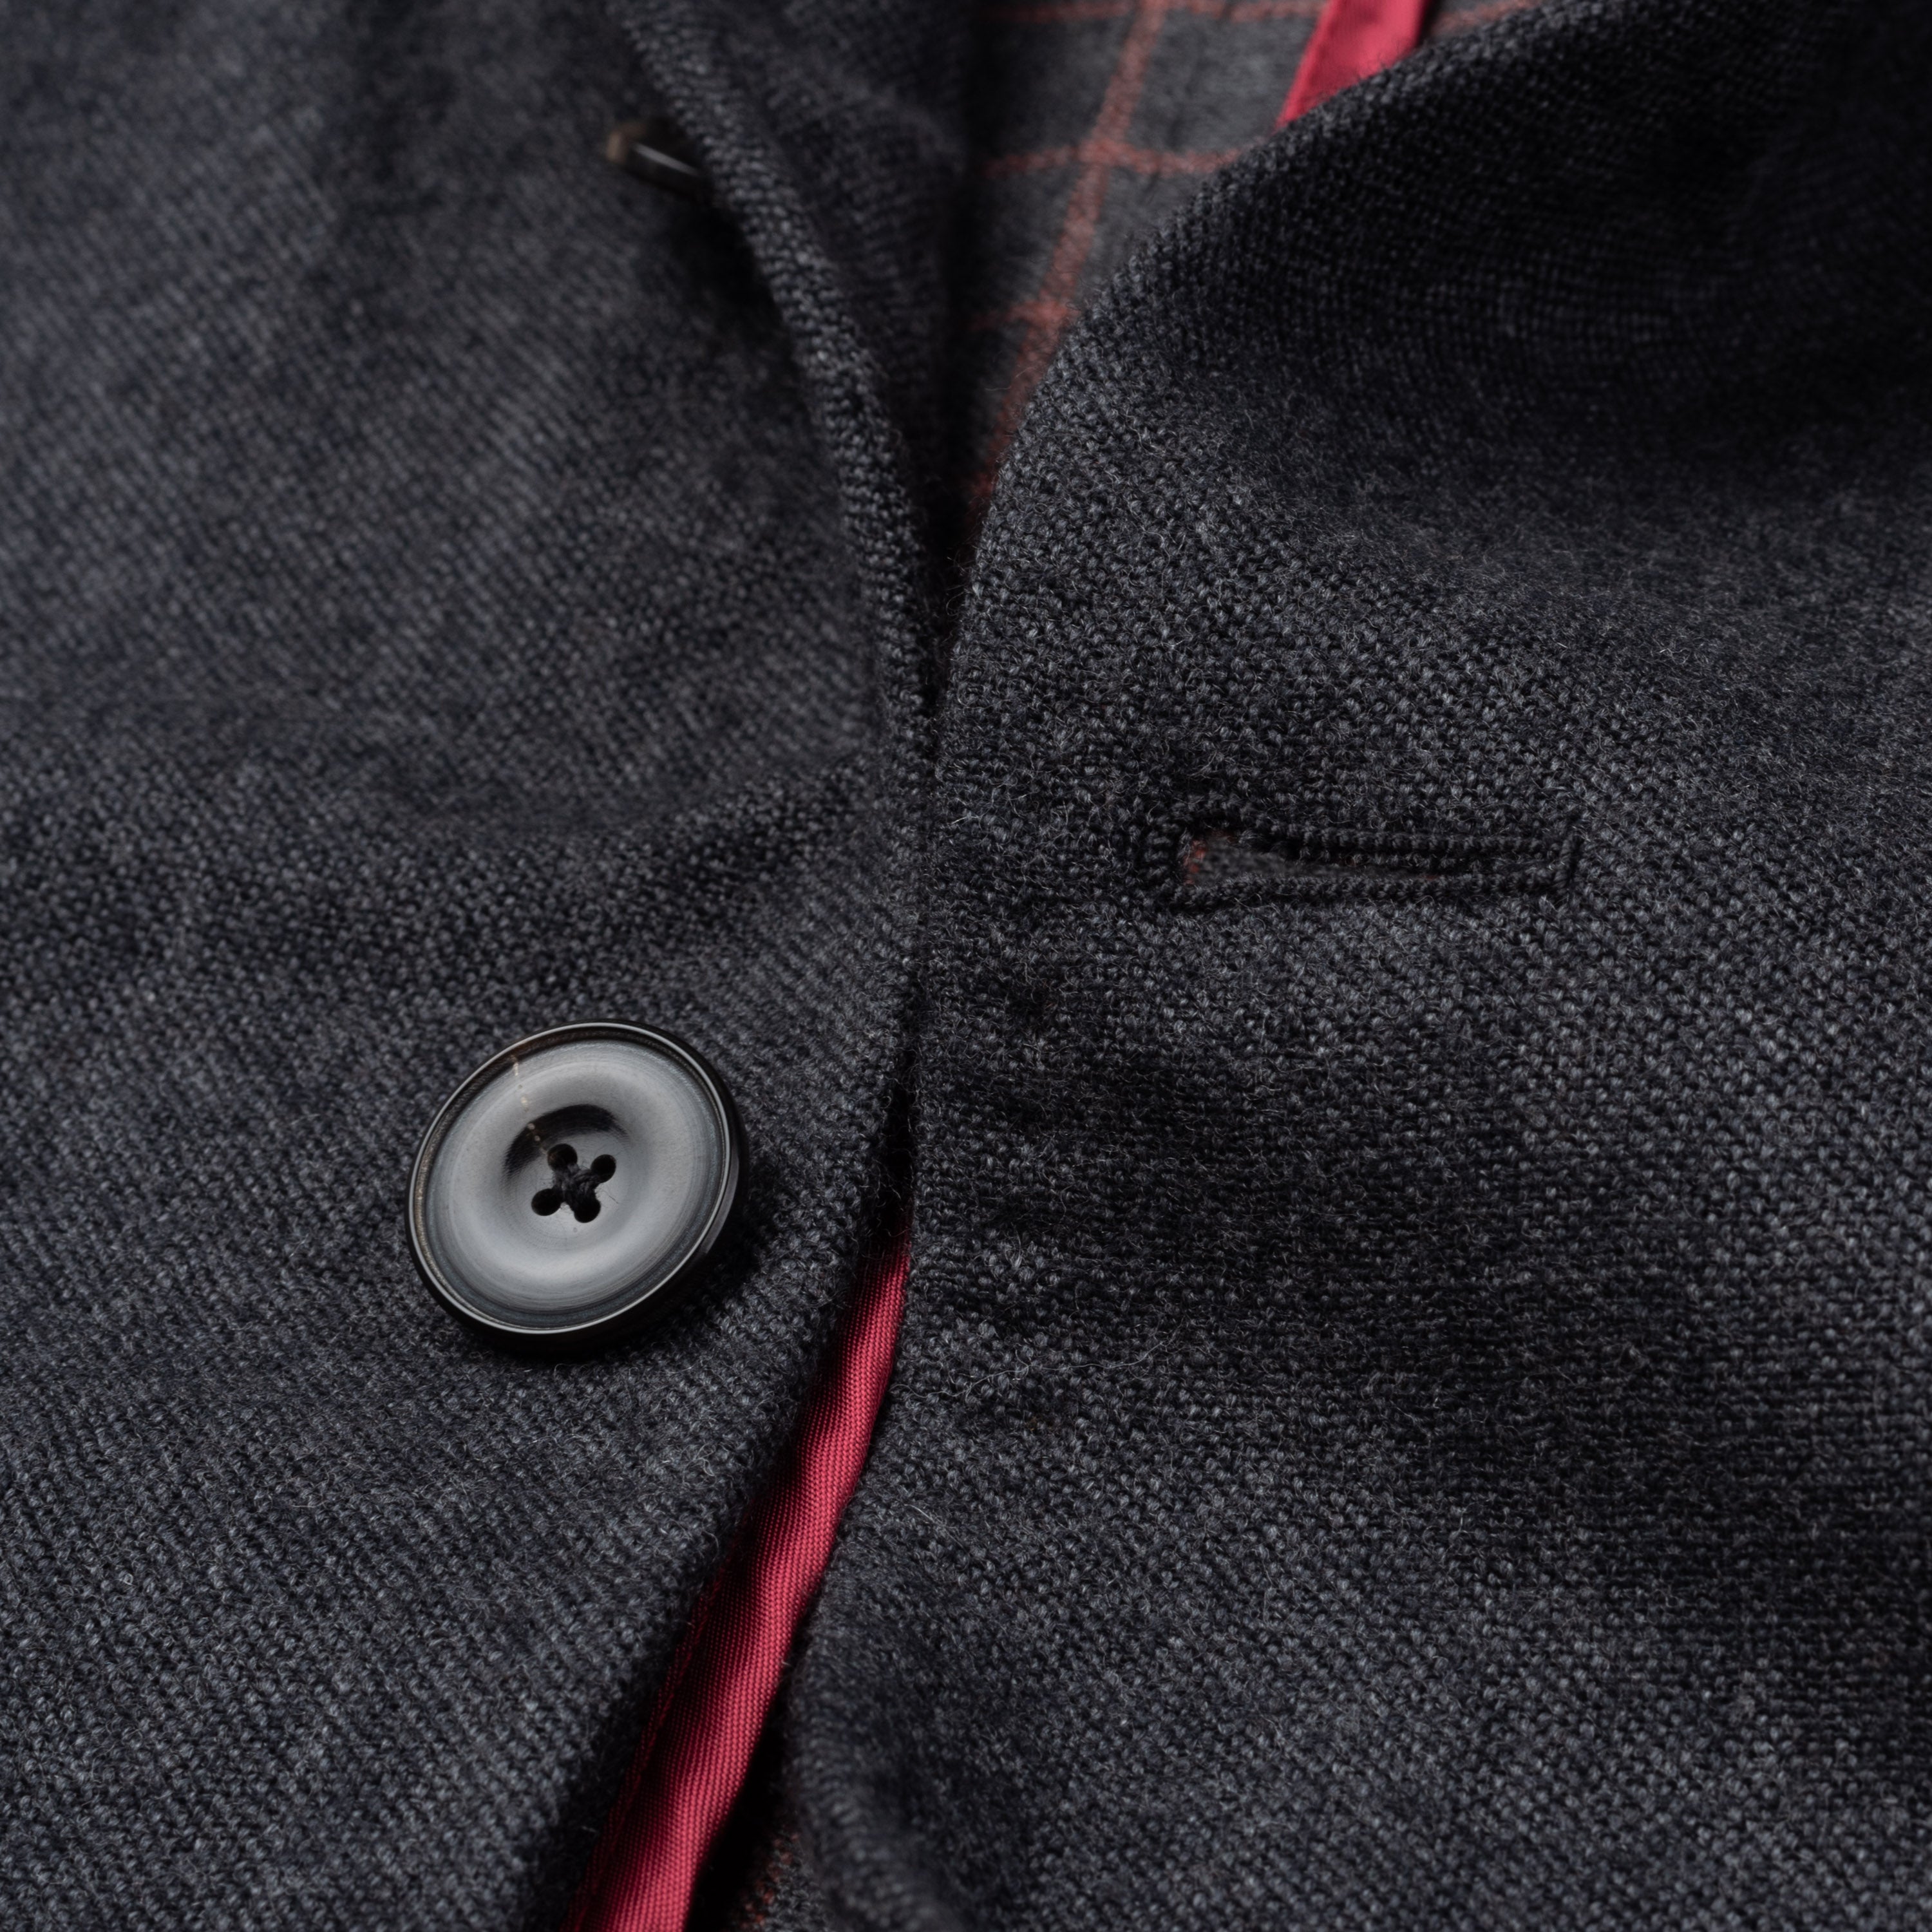 GIOVANNI CASTANGIA Handmade Gray Wool Flannel Jacket EU 50 NEW US 40